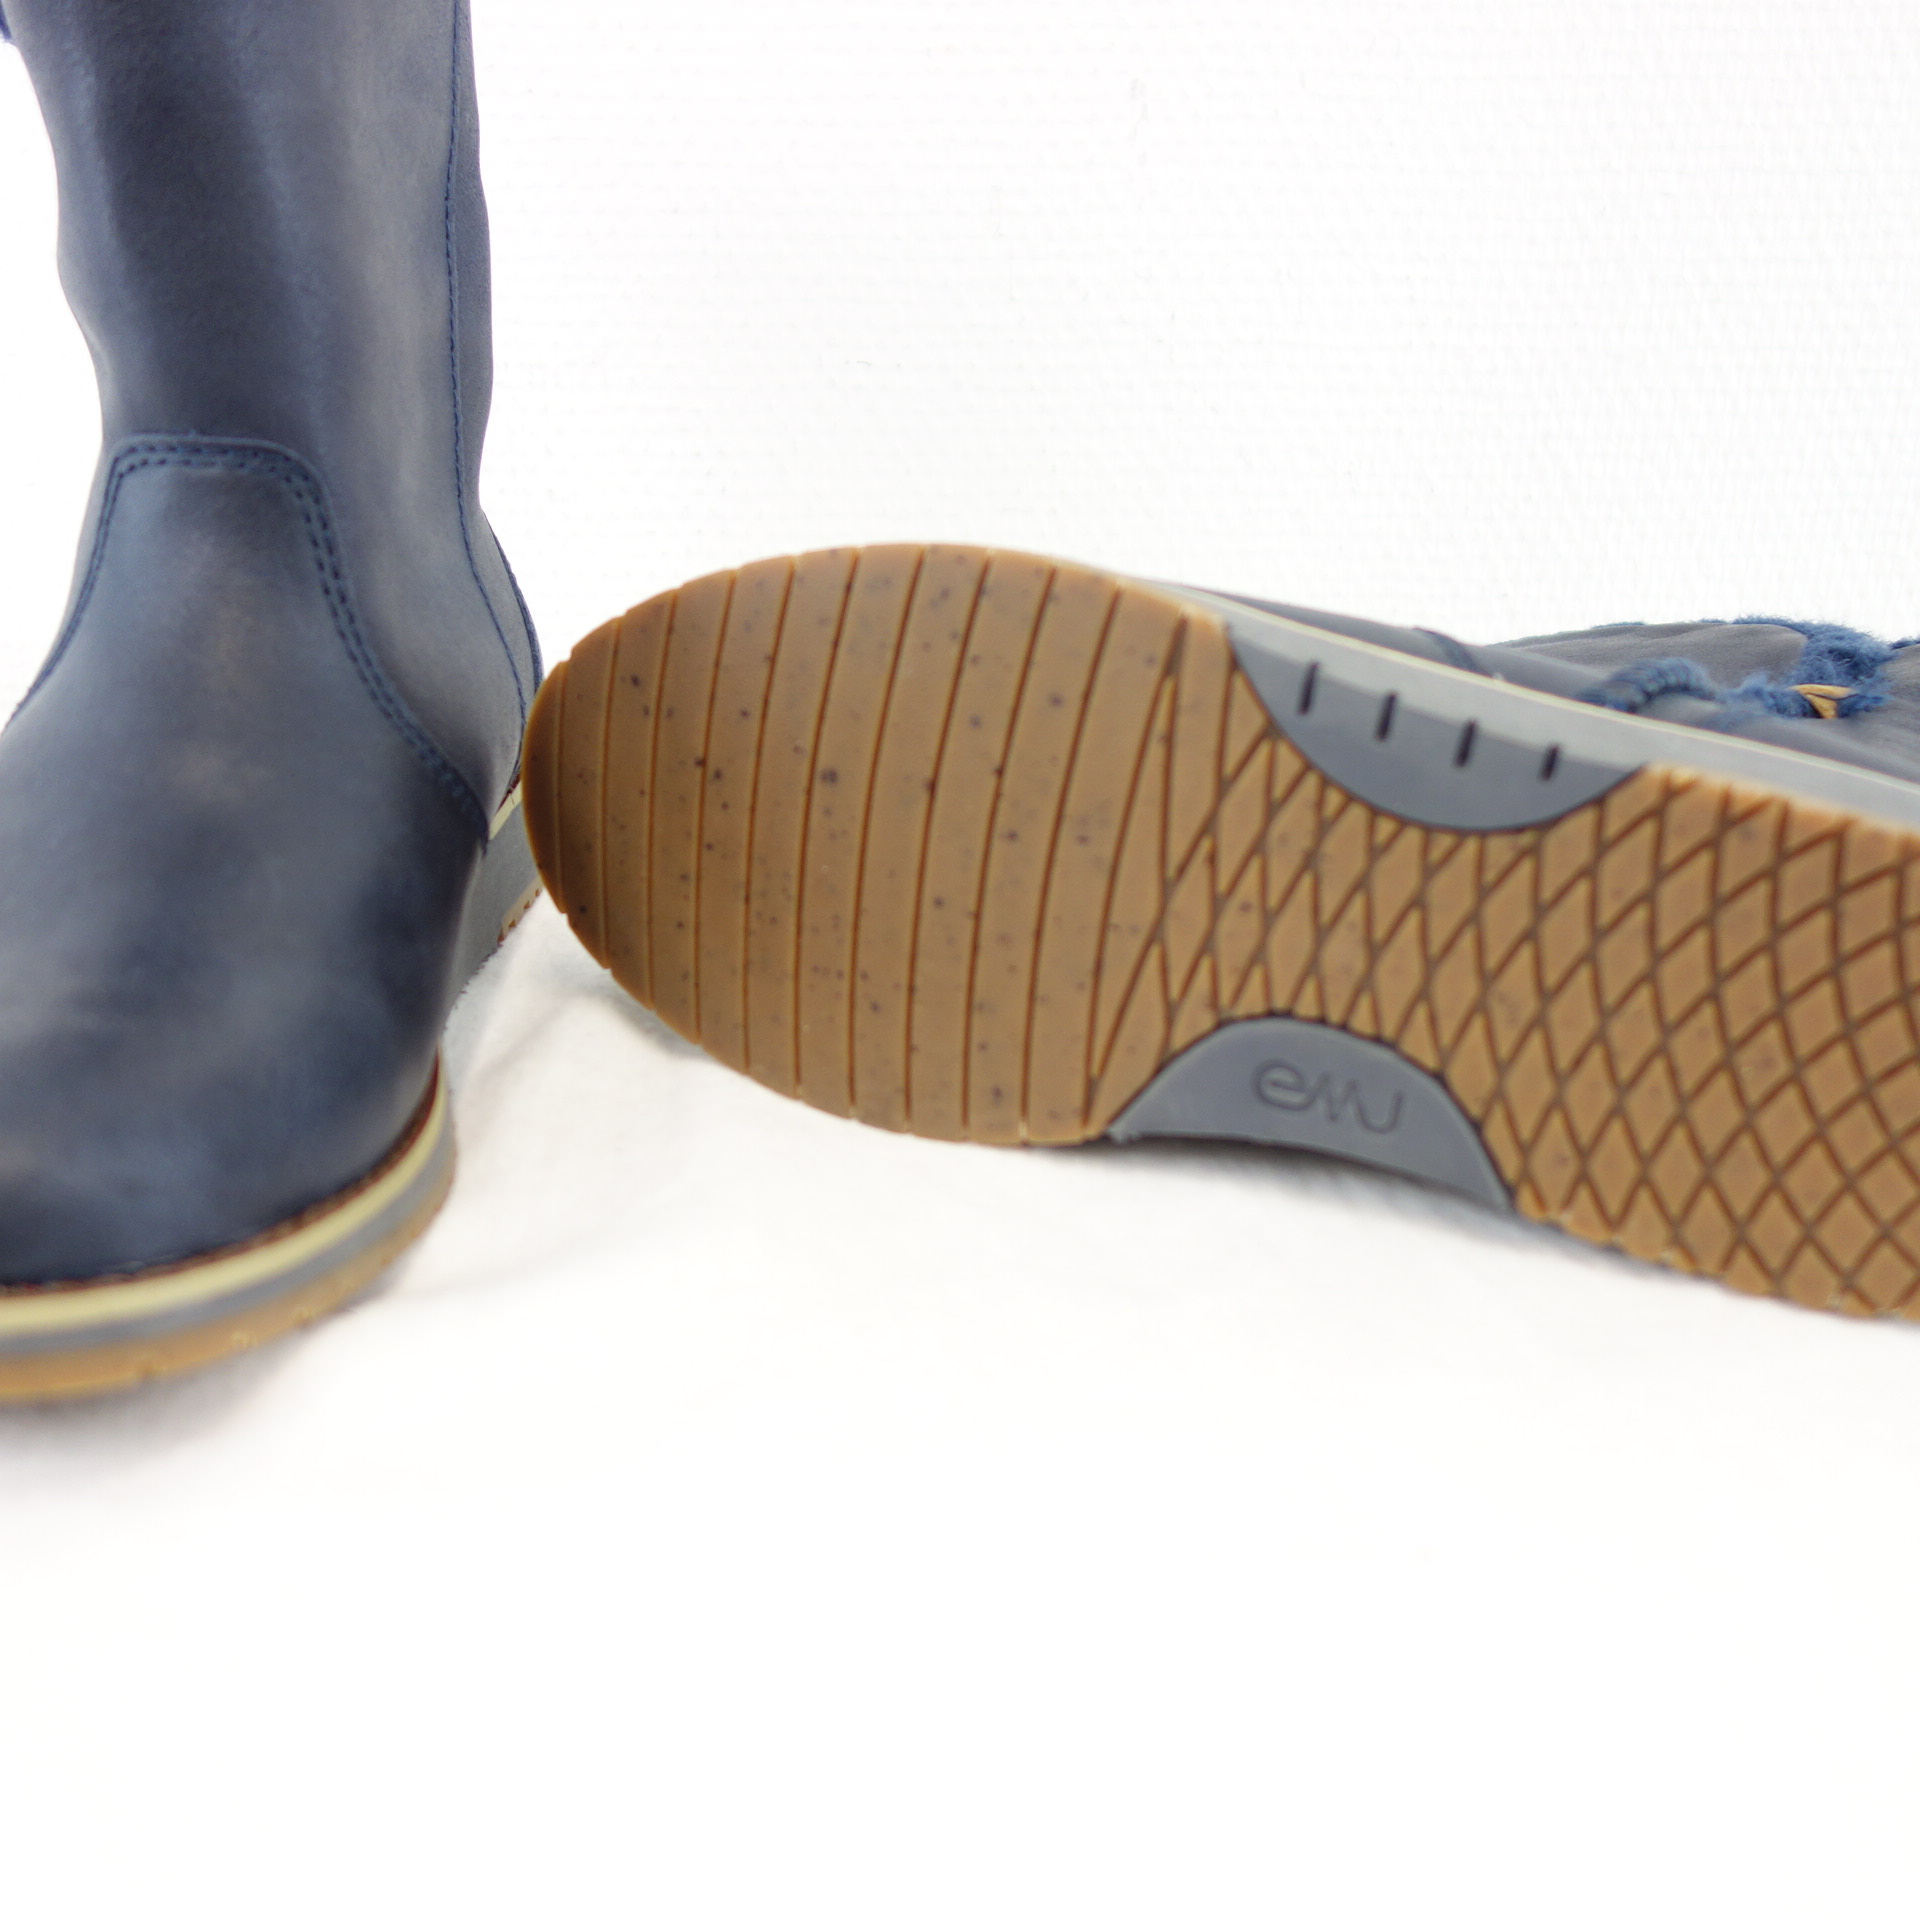 EMU Damen Schuhe  Boots Stiefel Blau Leder Lammfell Futter 37 Beach Lo